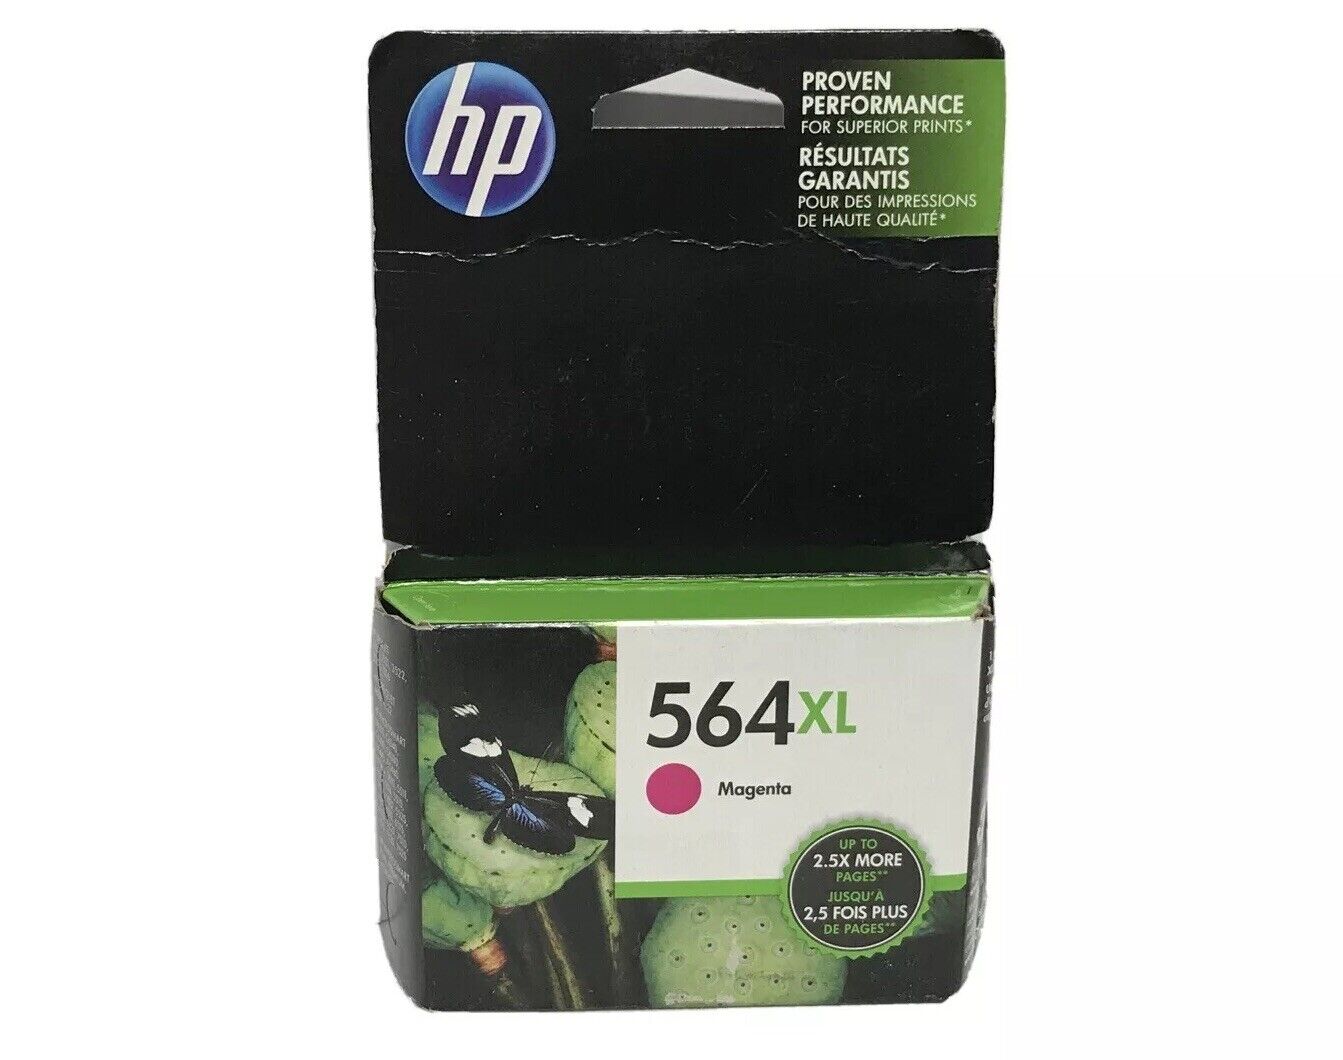 HP 564 XL Magenta Ink Cartridge Expired September 2019 Sealed